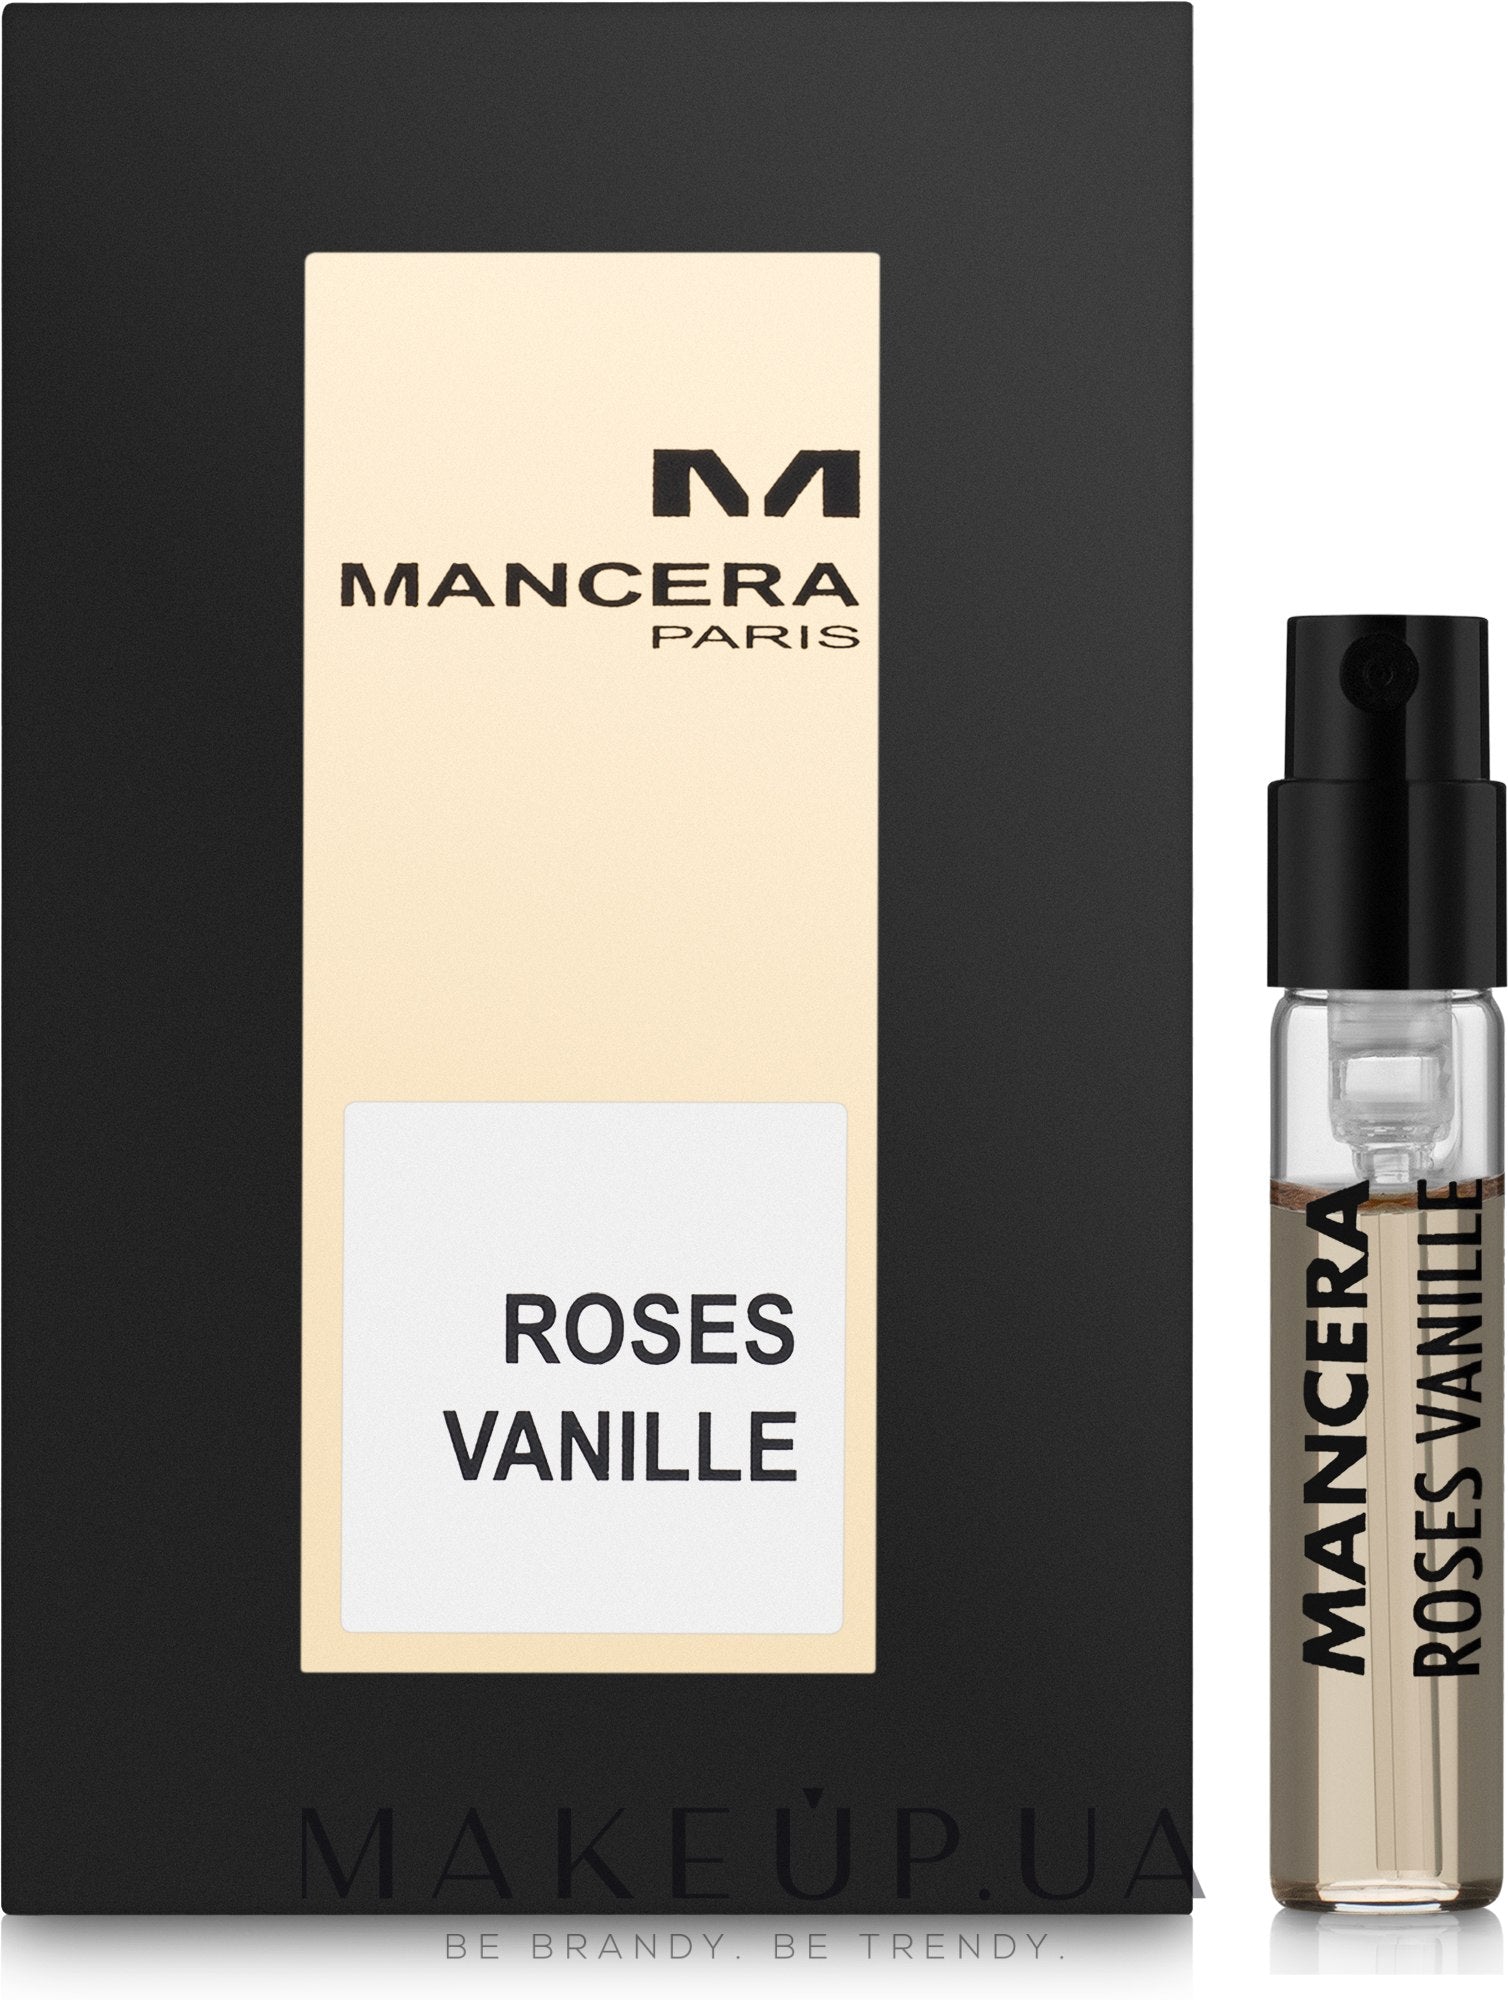 曼萨拉 Roses Vanille 样品-Mancera Roses Vanille-Mancera-2ml官方小样-creed香水样品